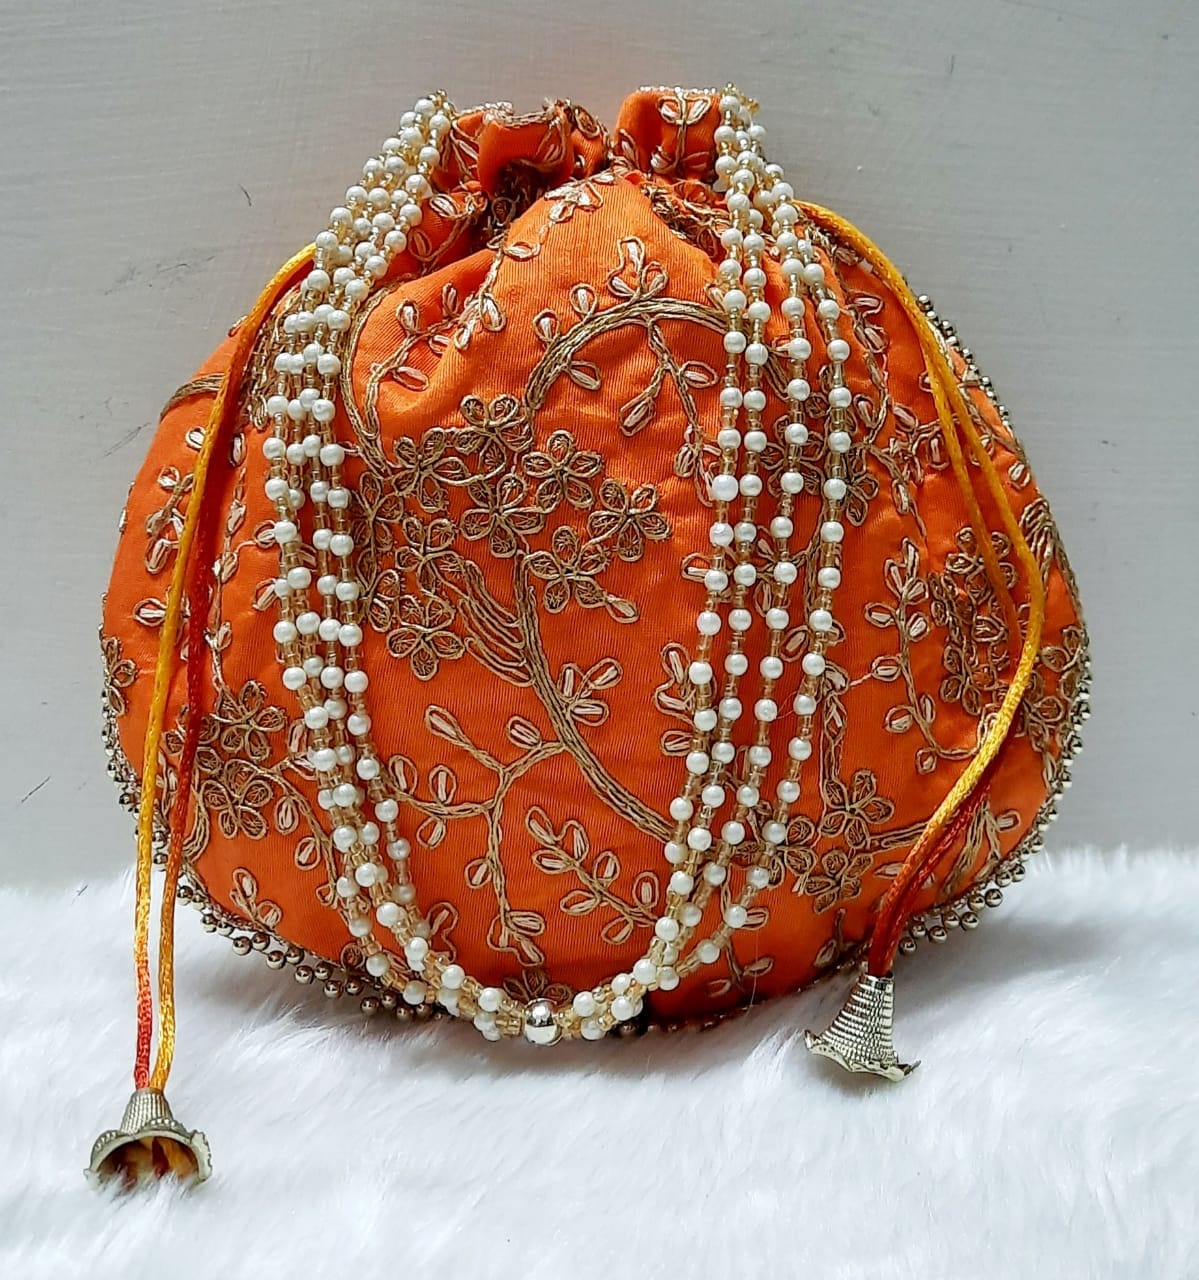 LAMANSH ® Women's Potli Bag Pack of 75 LAMANSH Pack of 75 Pcs Matka Style Tree Pattern Potli bags for women handbags traditional Indian Wristlet